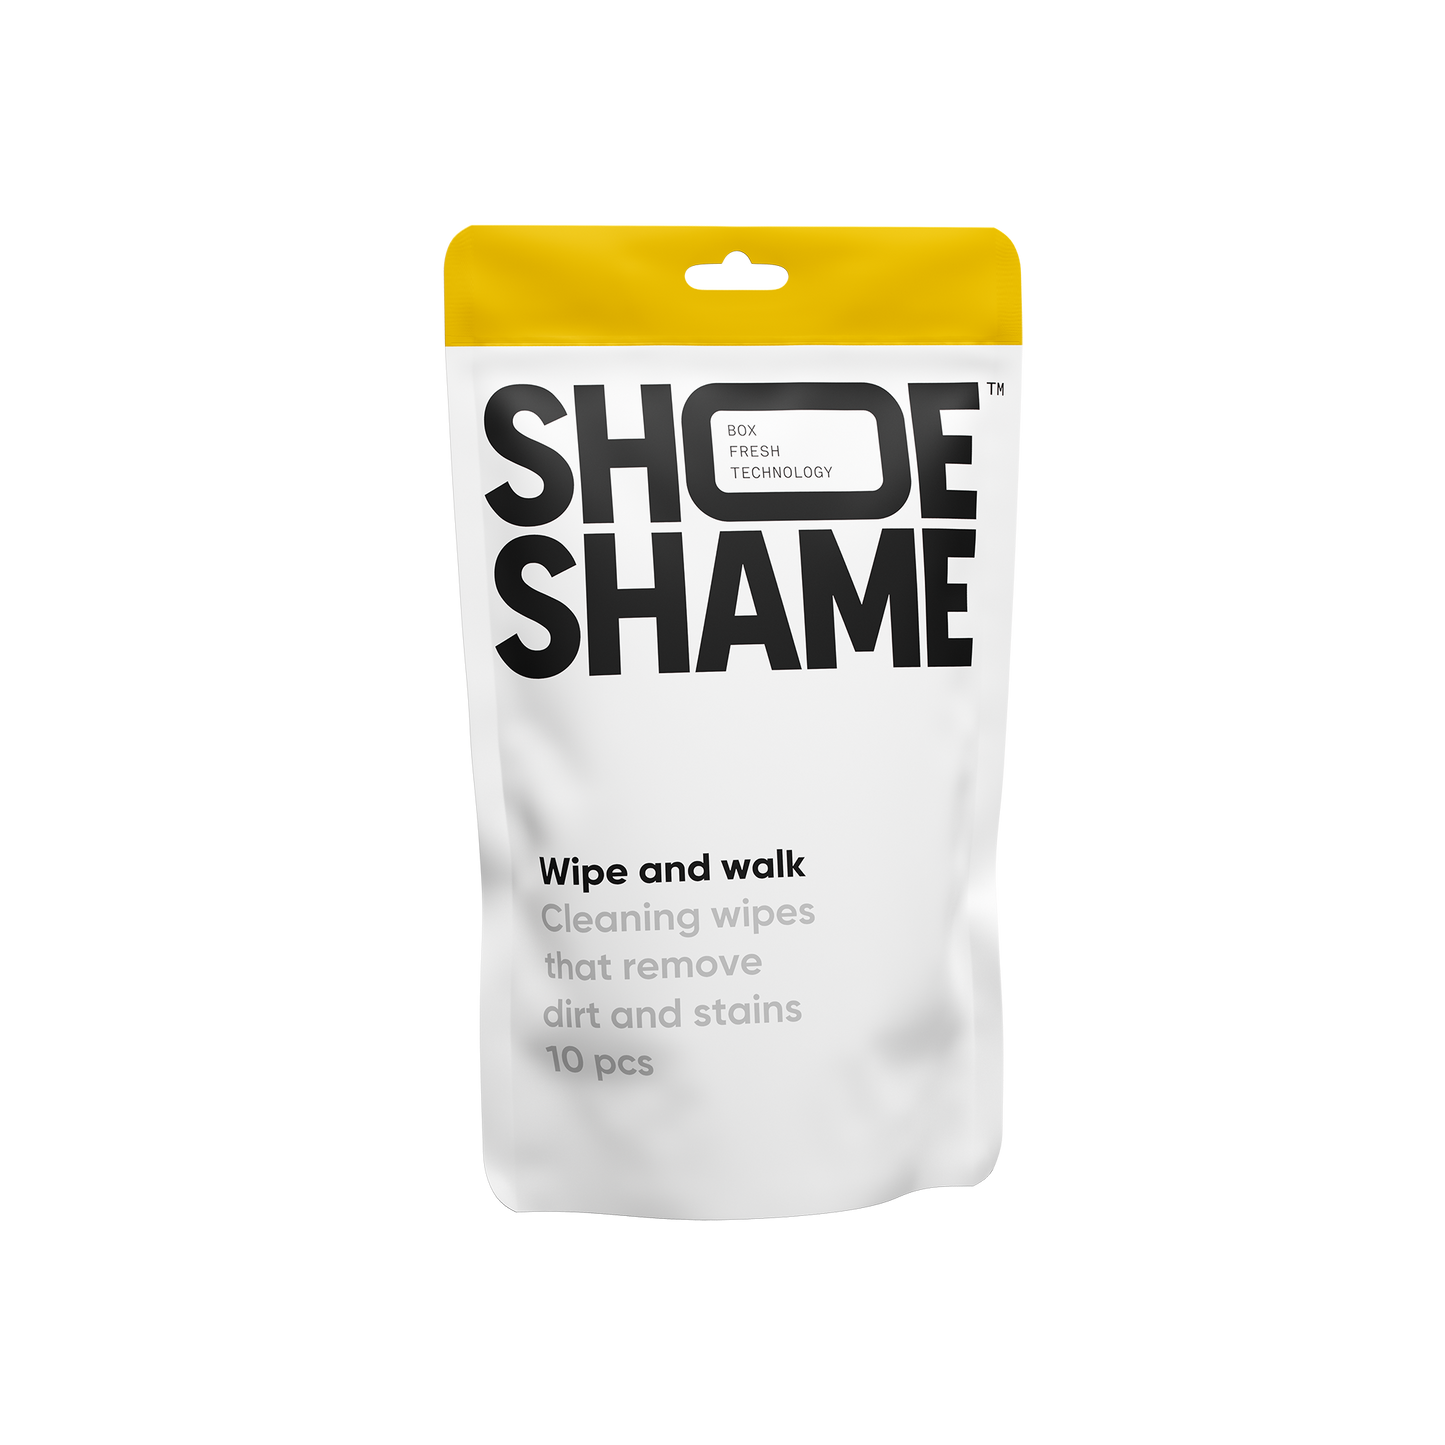 SHOE SHAME Wipe and Walk - 10pcs